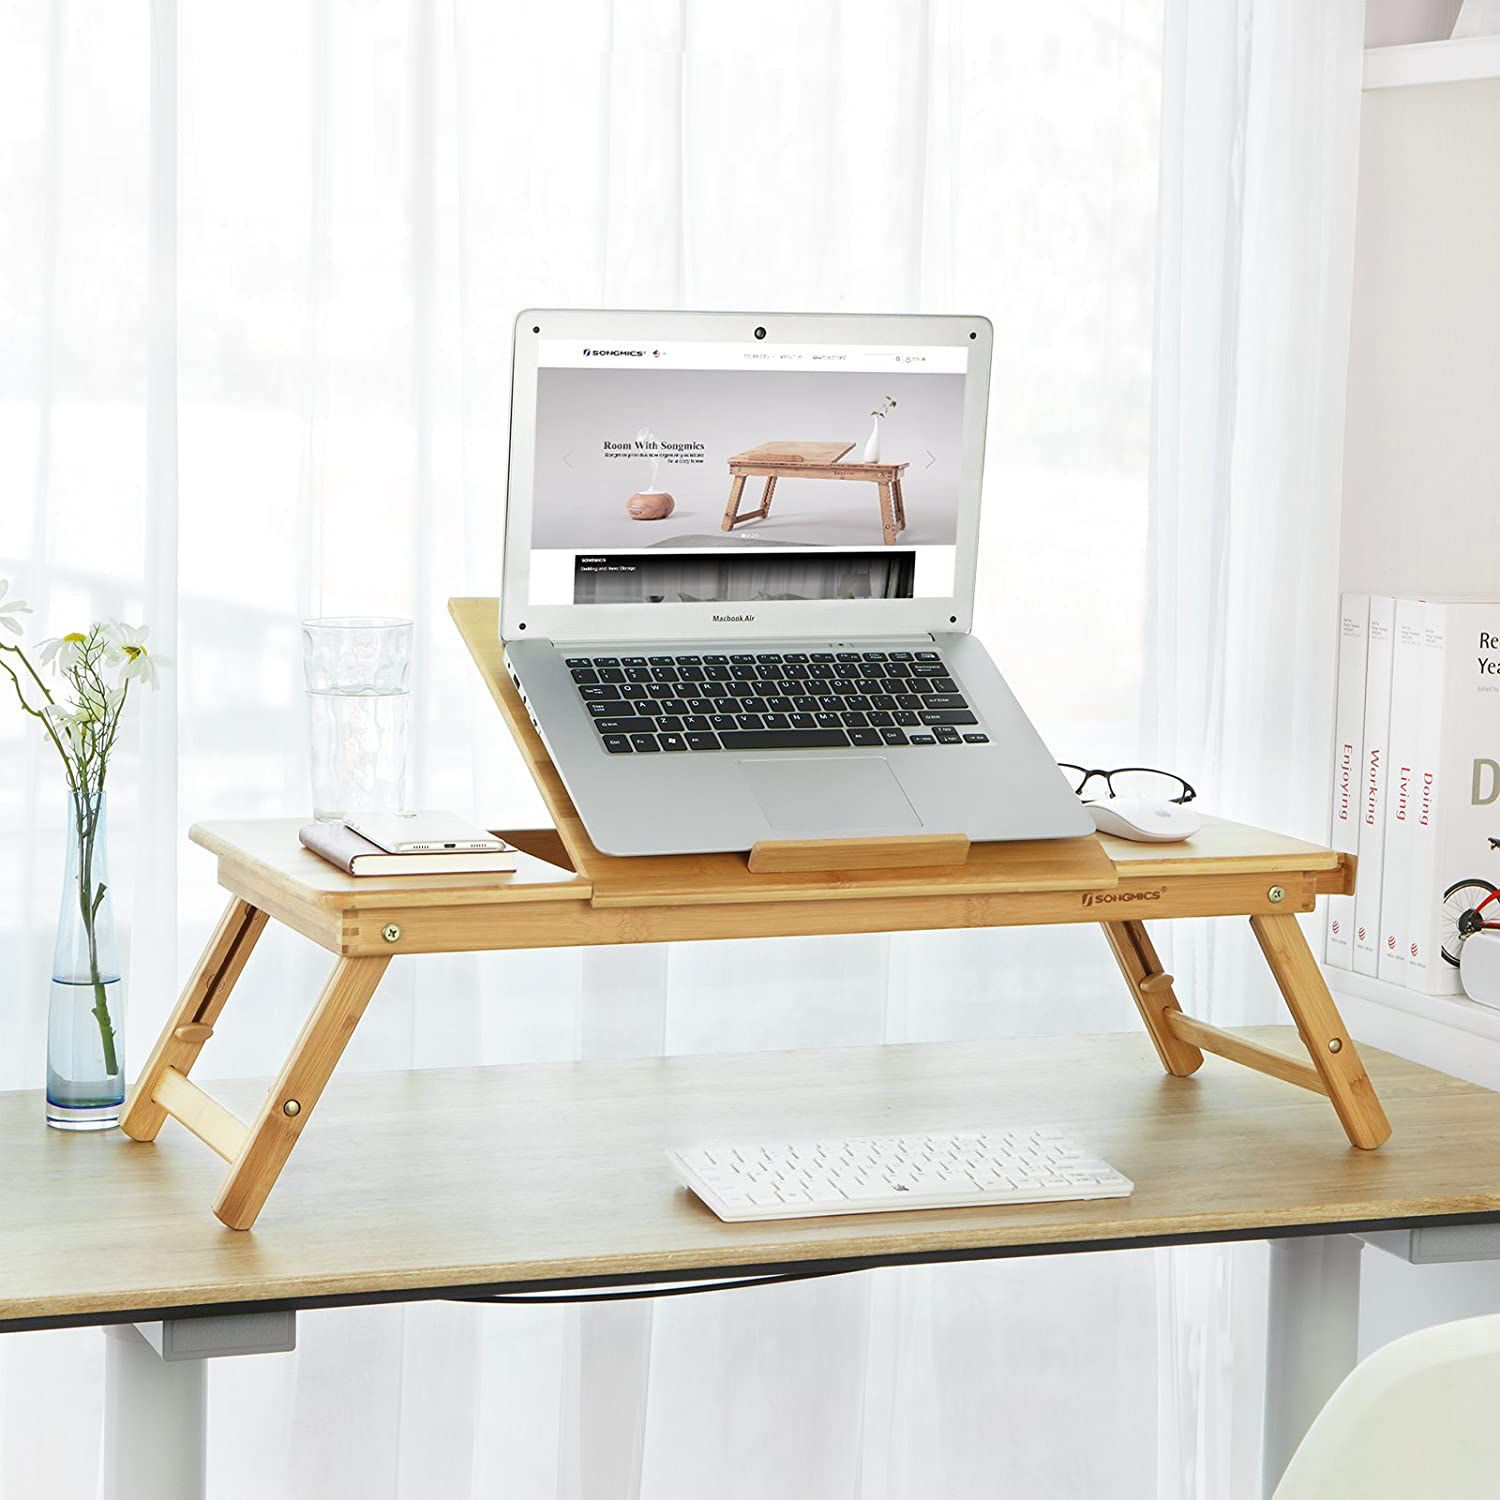 Adjustable Height/desktop Folding Laptop Table Computer Stand Desk Rolling Cart